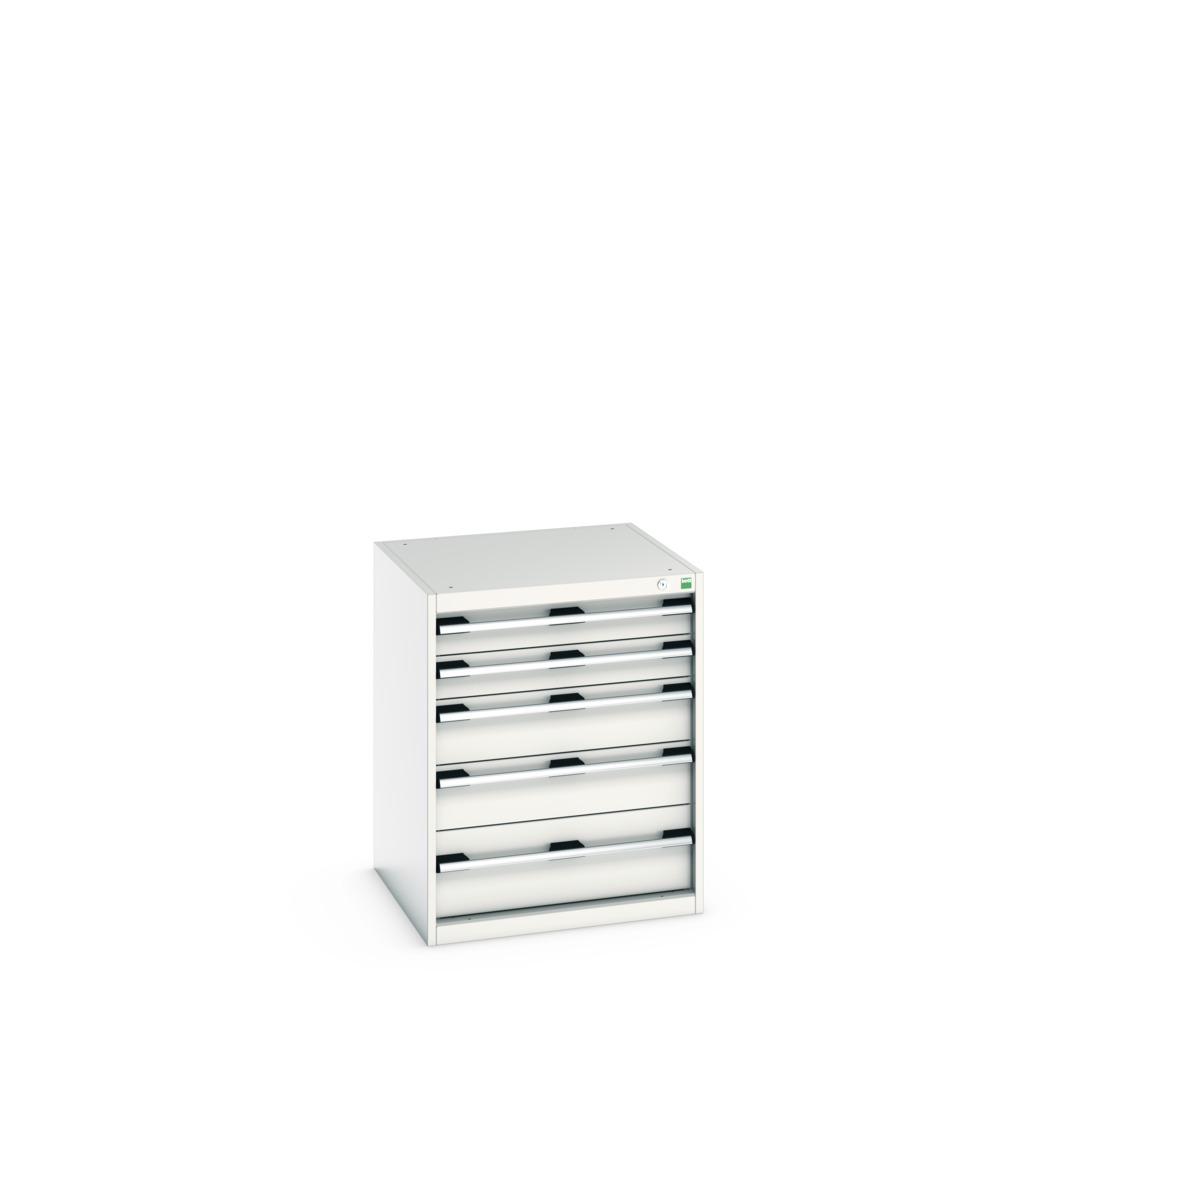 40019035.16V - cubio armoire à tiroirs SL-668-5.1